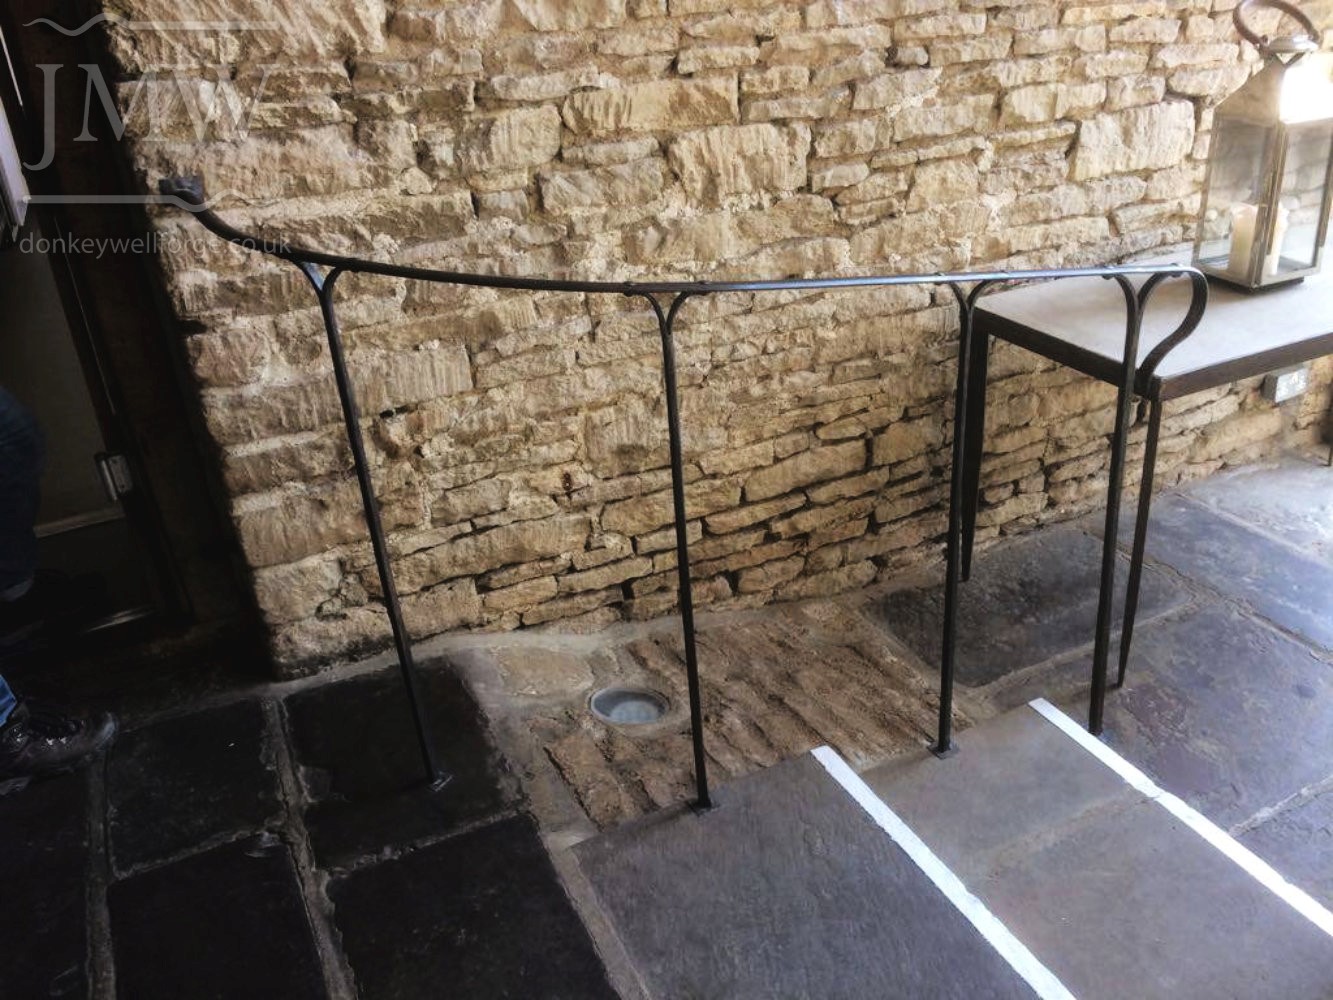 cripps-barn-wedding-venue-handrail-ornate-wrought-iron